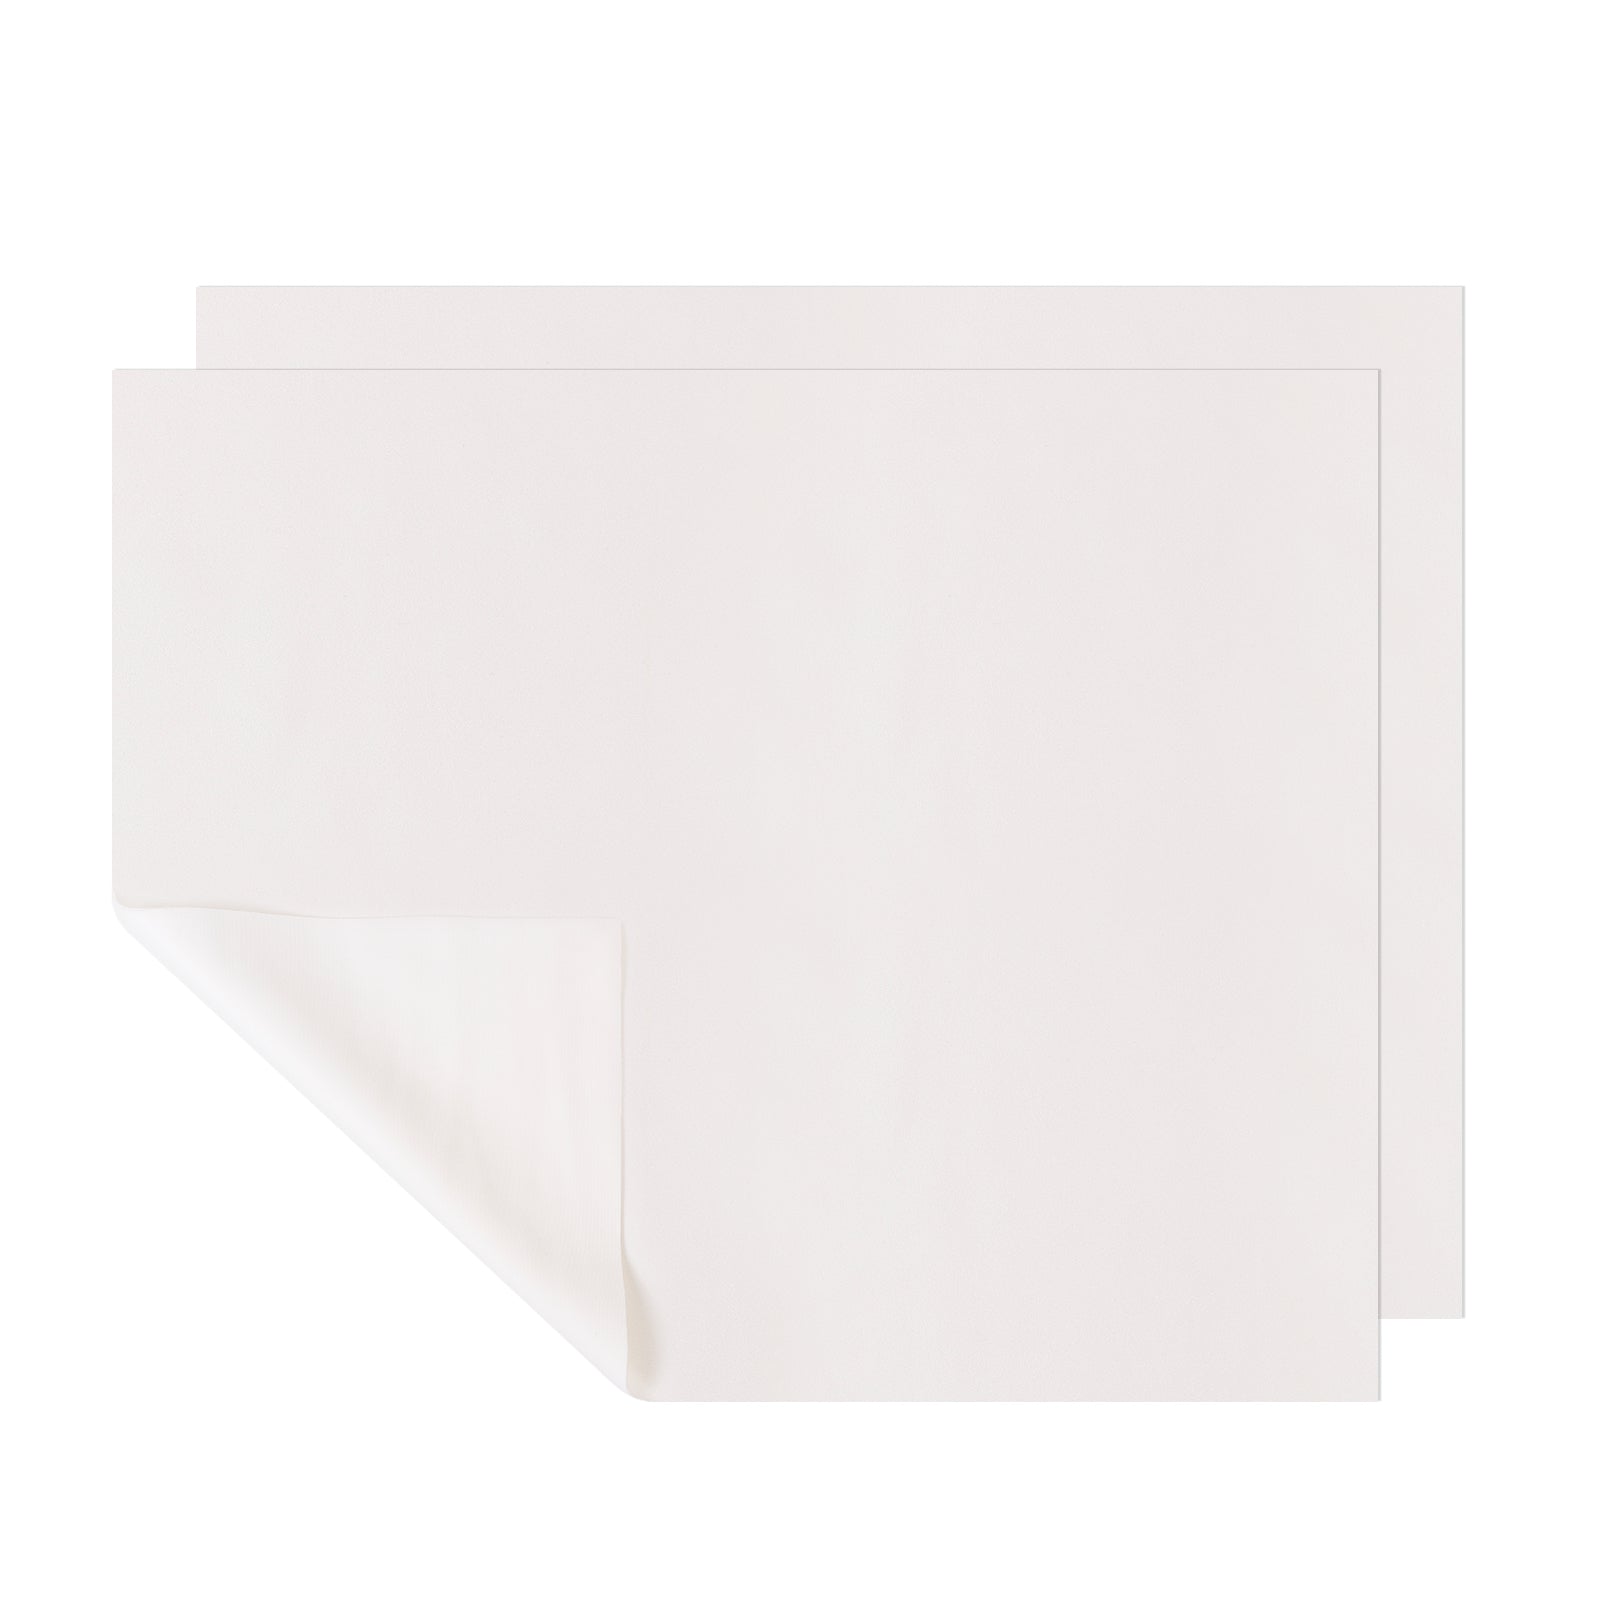 Wholesale Craft Blanks Sublimation Acrylic Sheets White 12 x 12 24 Sheets